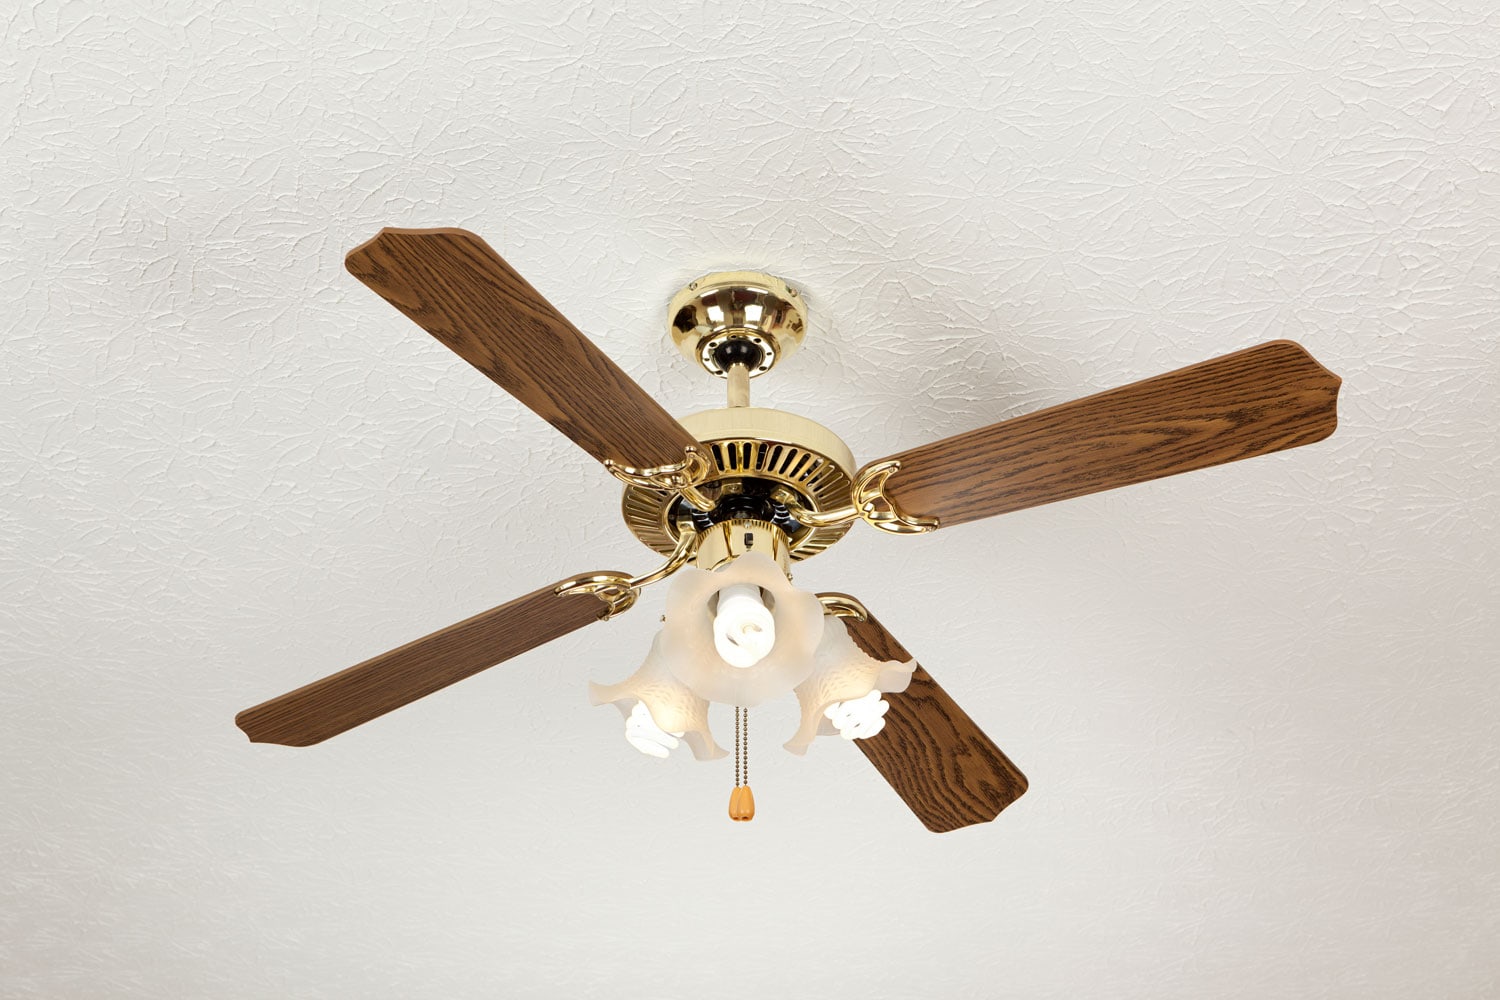 Four blade ceiling fan with light bulbs